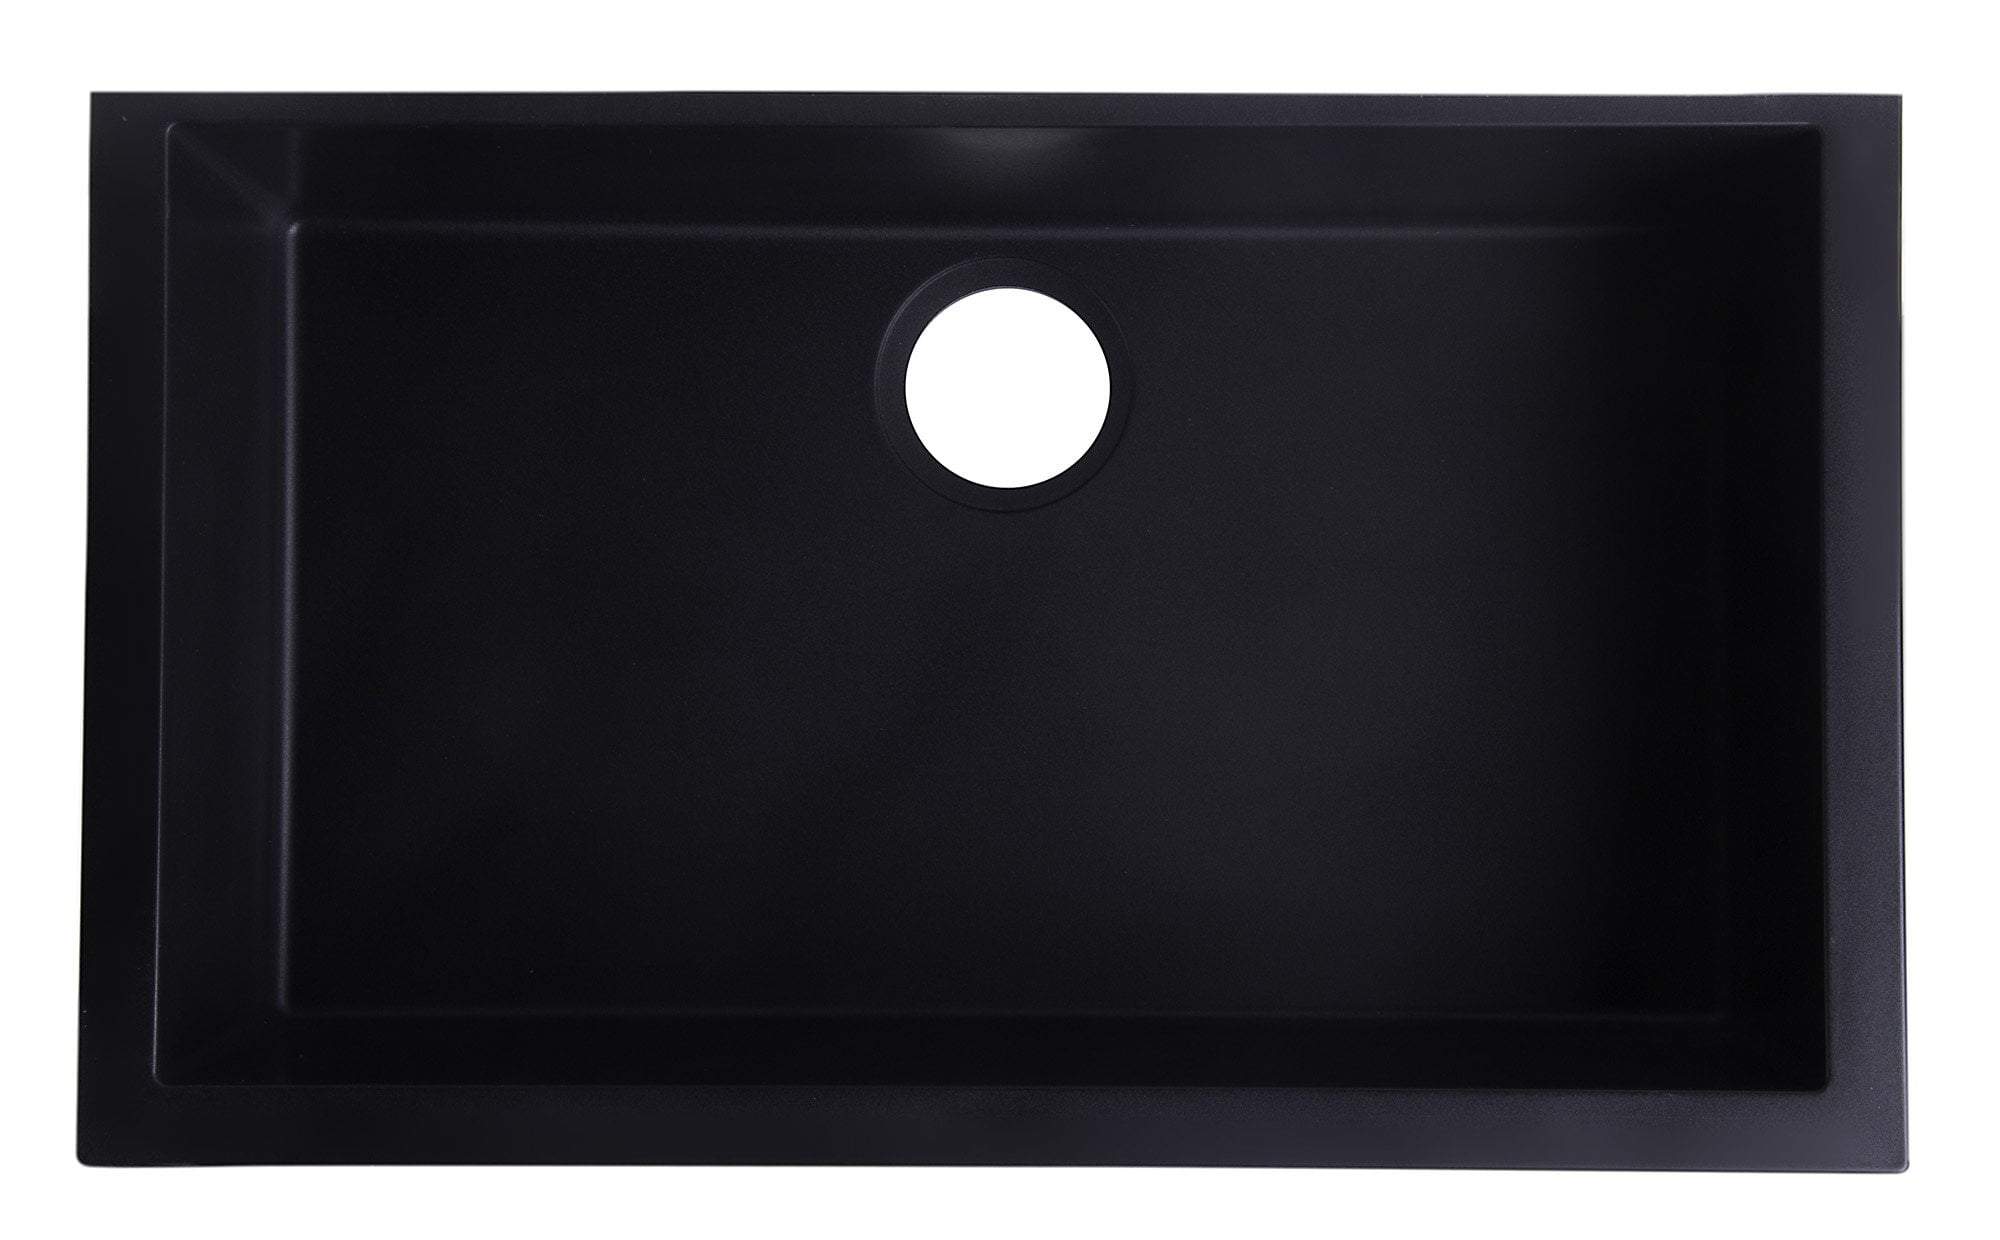 ALFI brand AB3020UM-BLA Black 30" Undermount Single Bowl Granite Composite Kitchen Sink